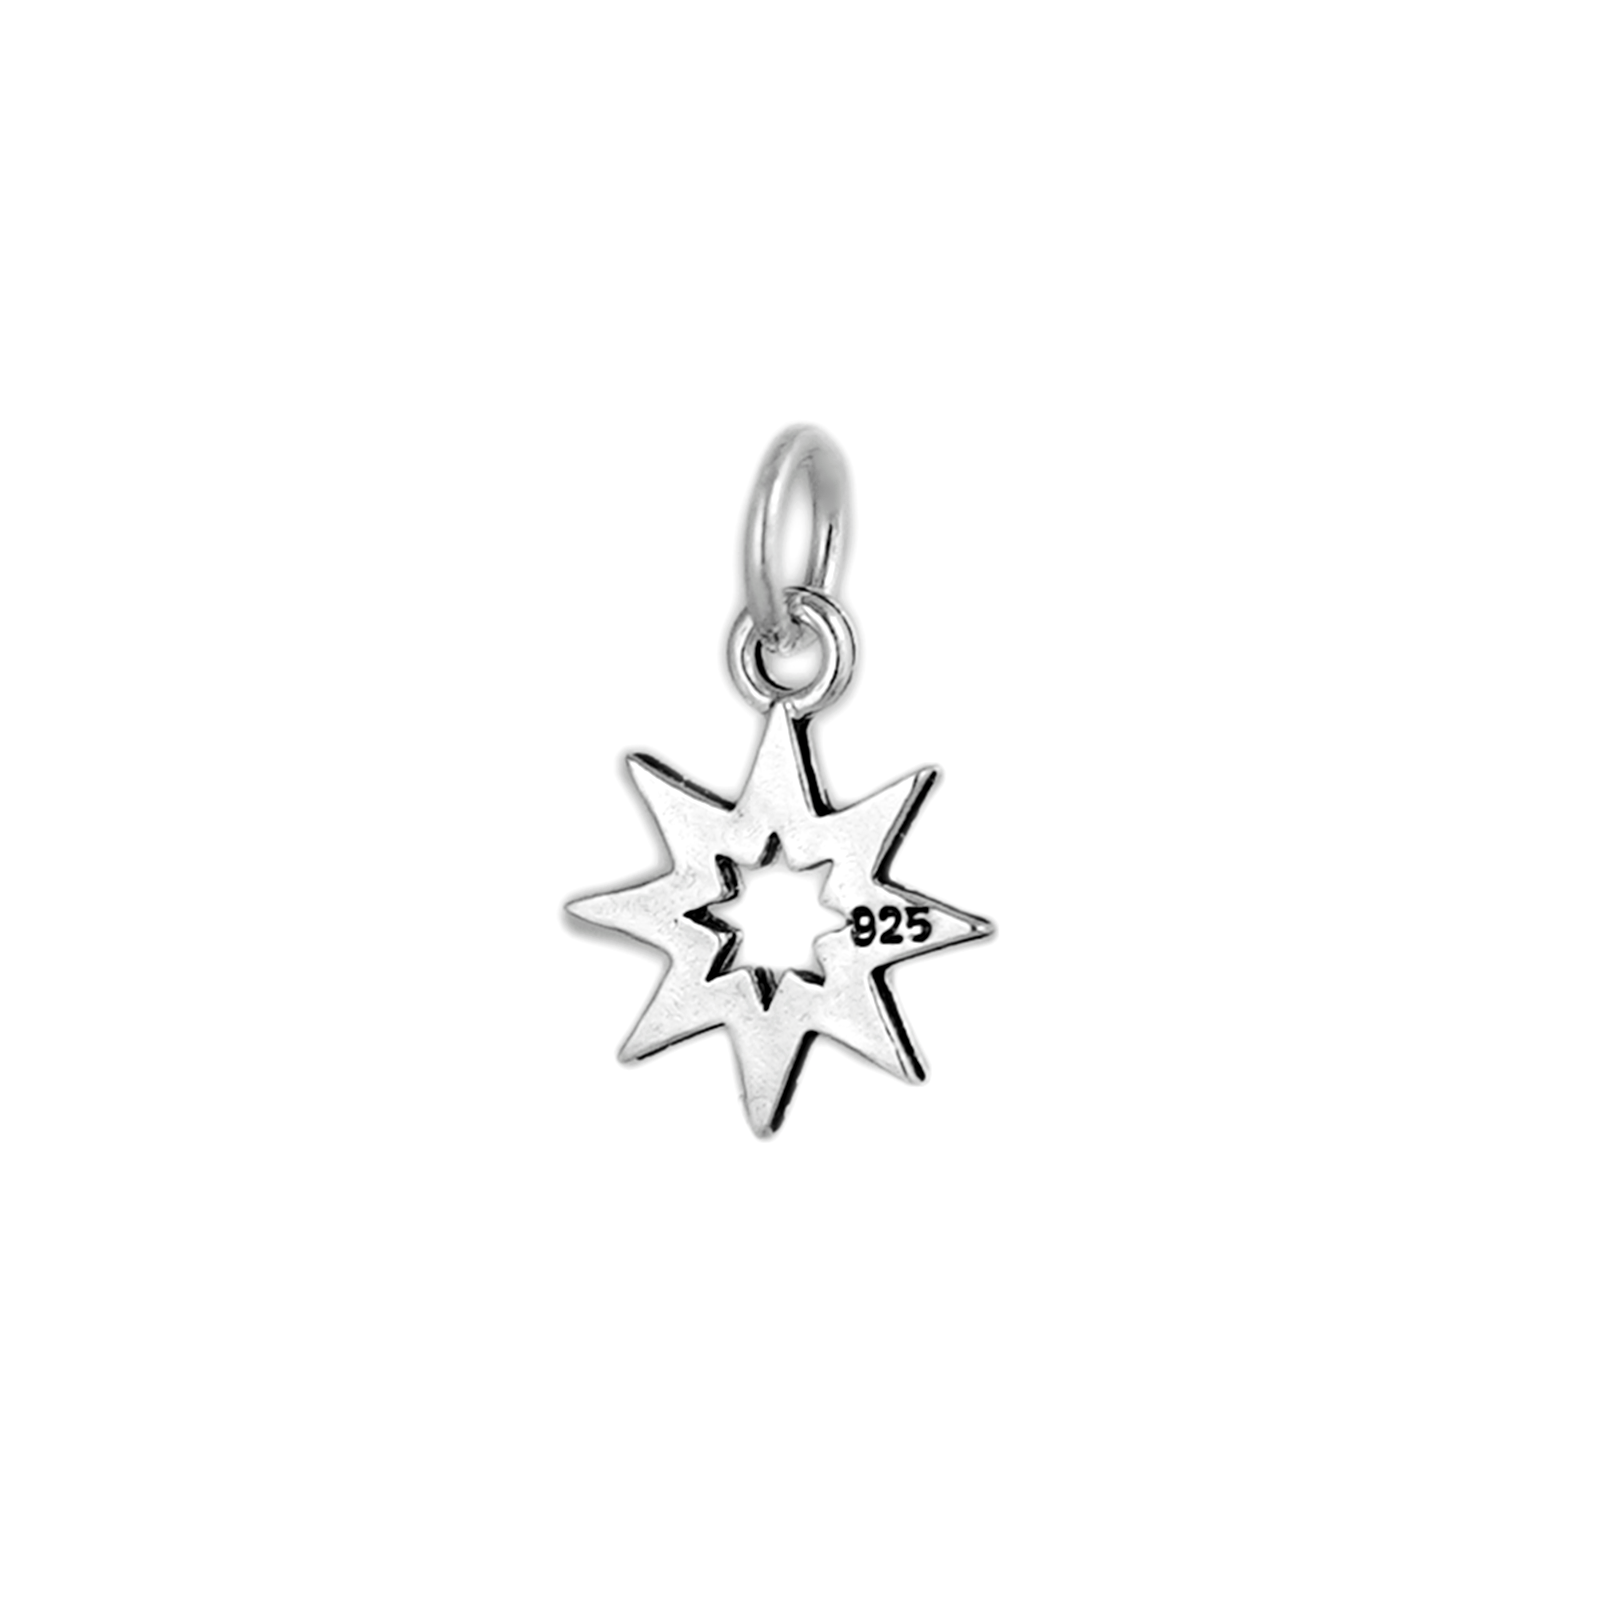 Sterling Silver Oxidized 8 Pointed Star Octagram Pendant for Necklace & Bracelet - sugarkittenlondon